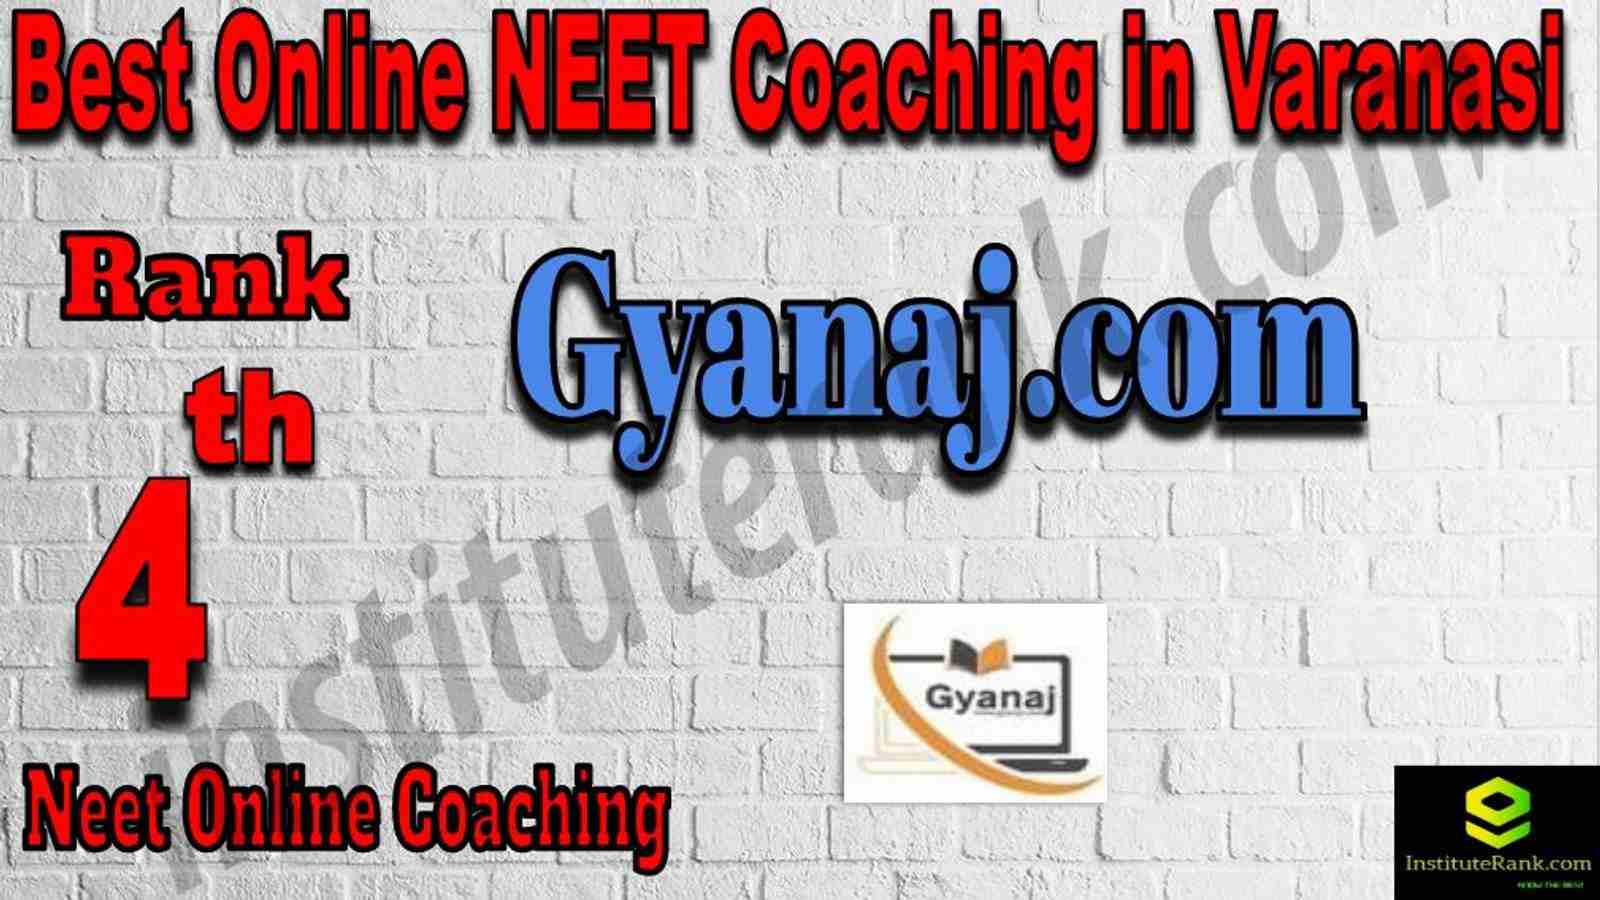 4th Best Online Neet Coaching in Varanasi